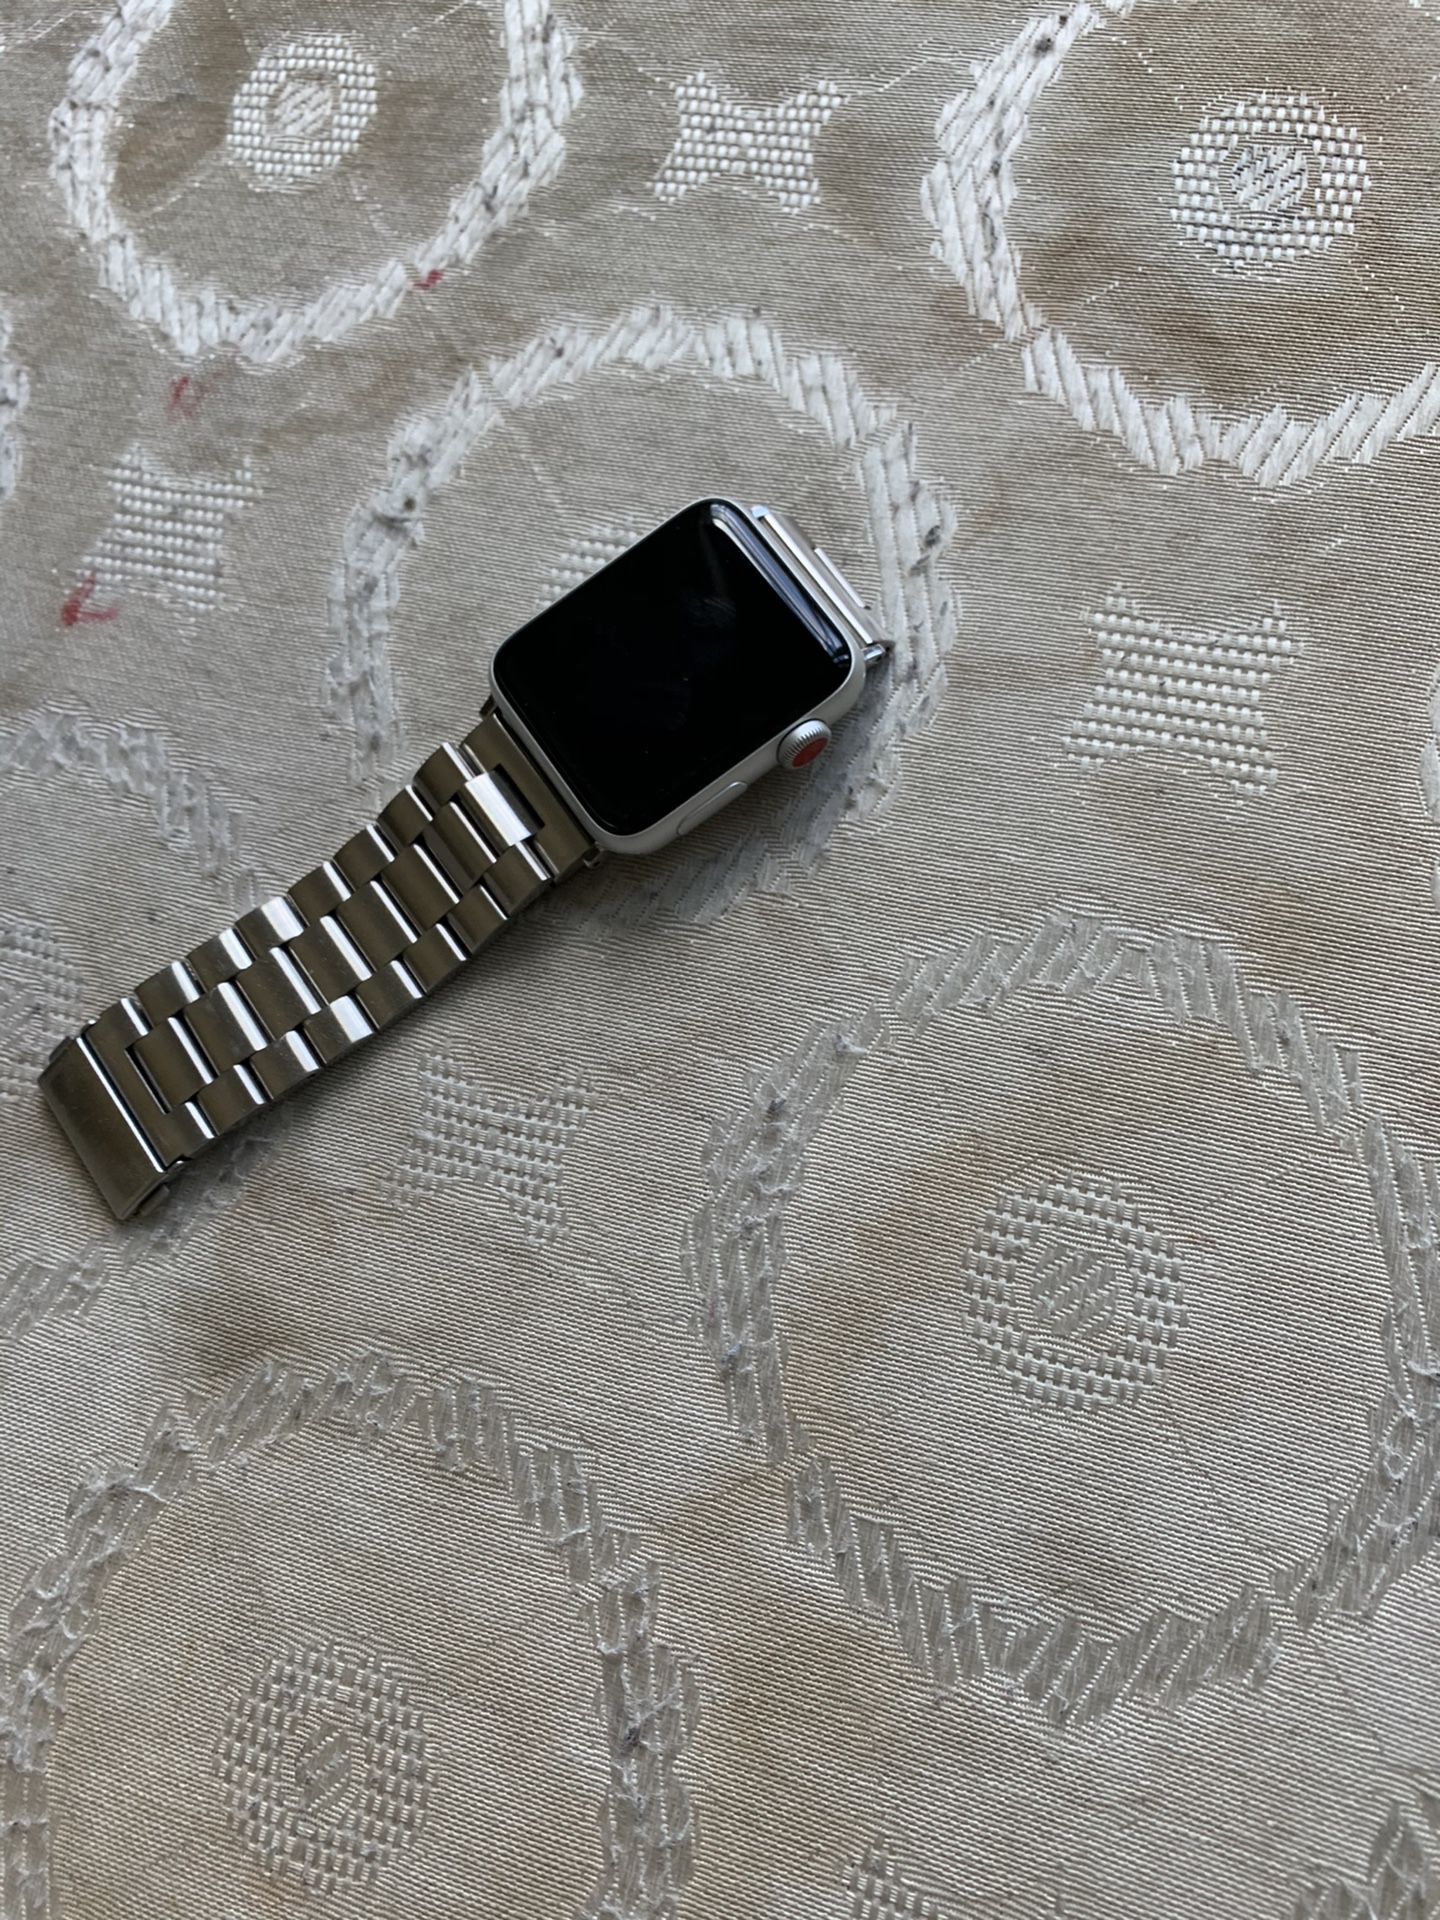 Excellent Apple Watch cellular model